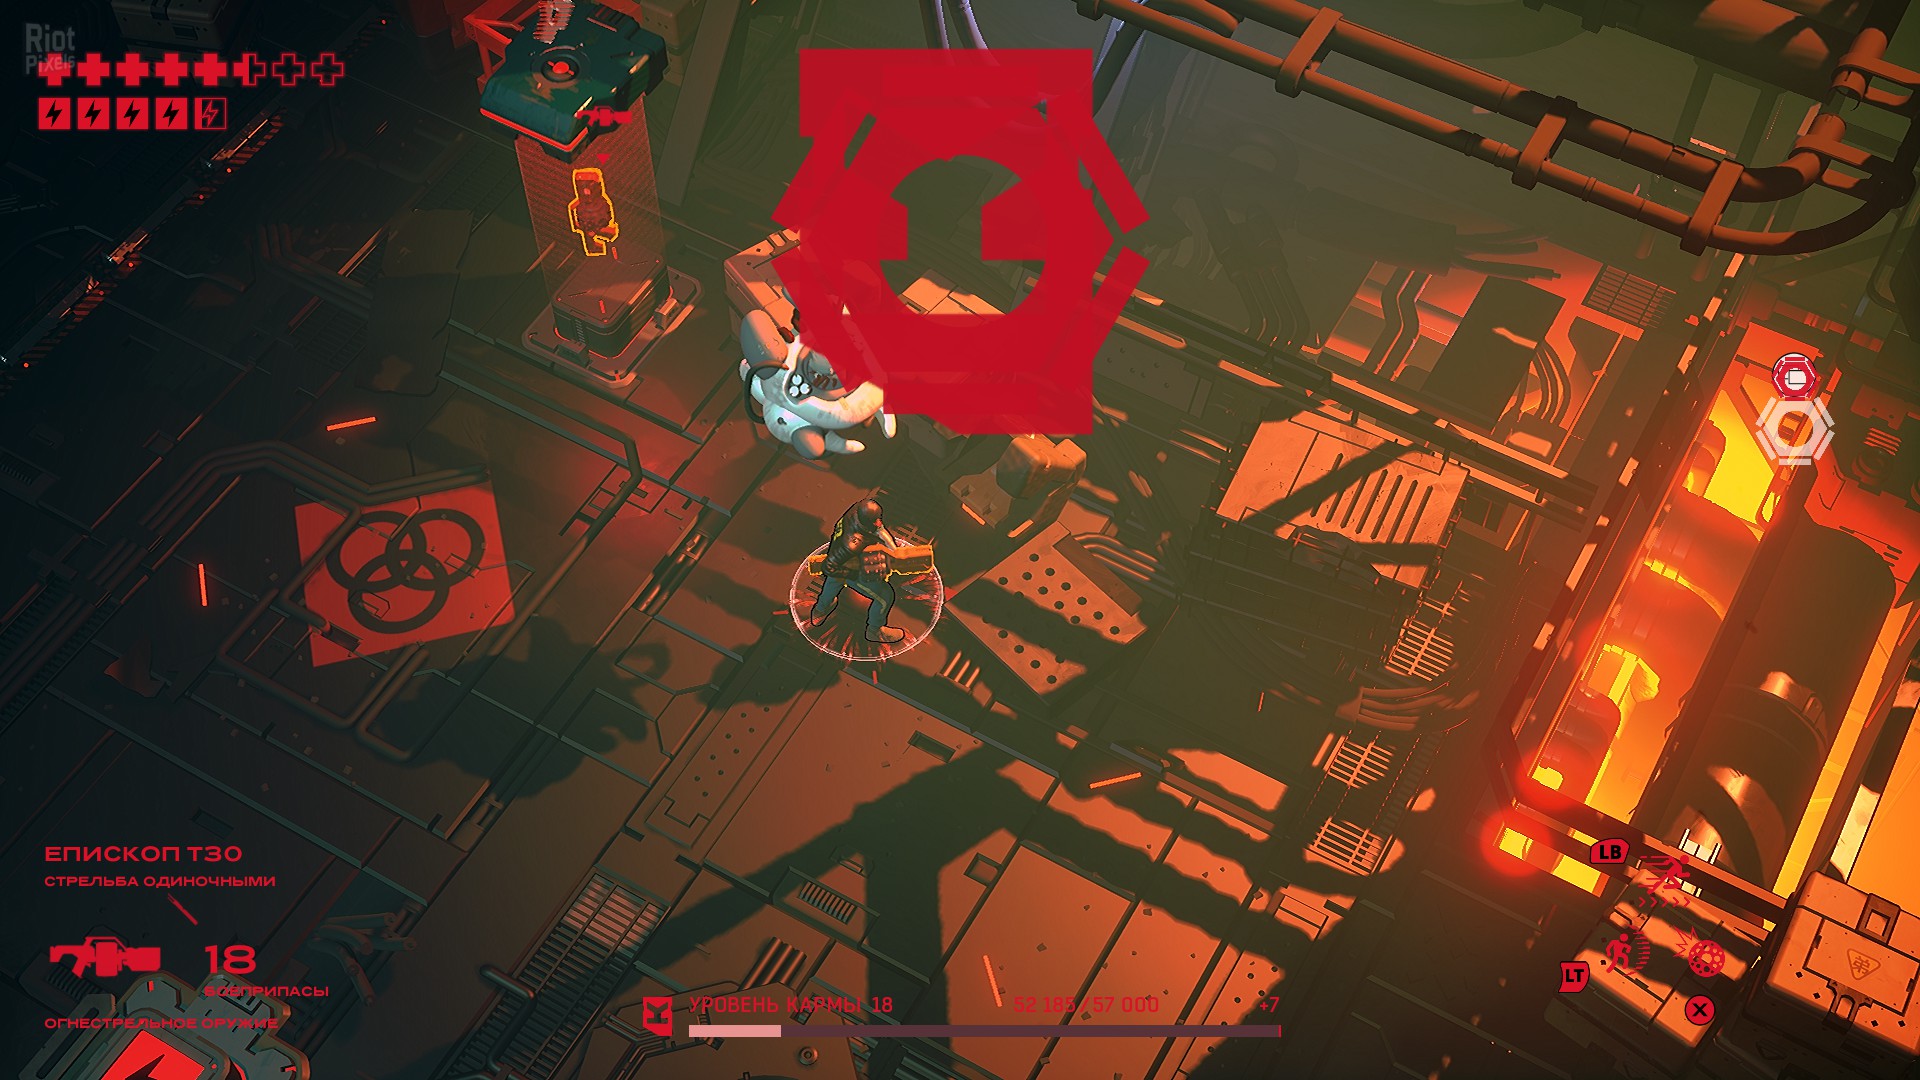 Ruiner - game screenshots at Riot Pixels, images